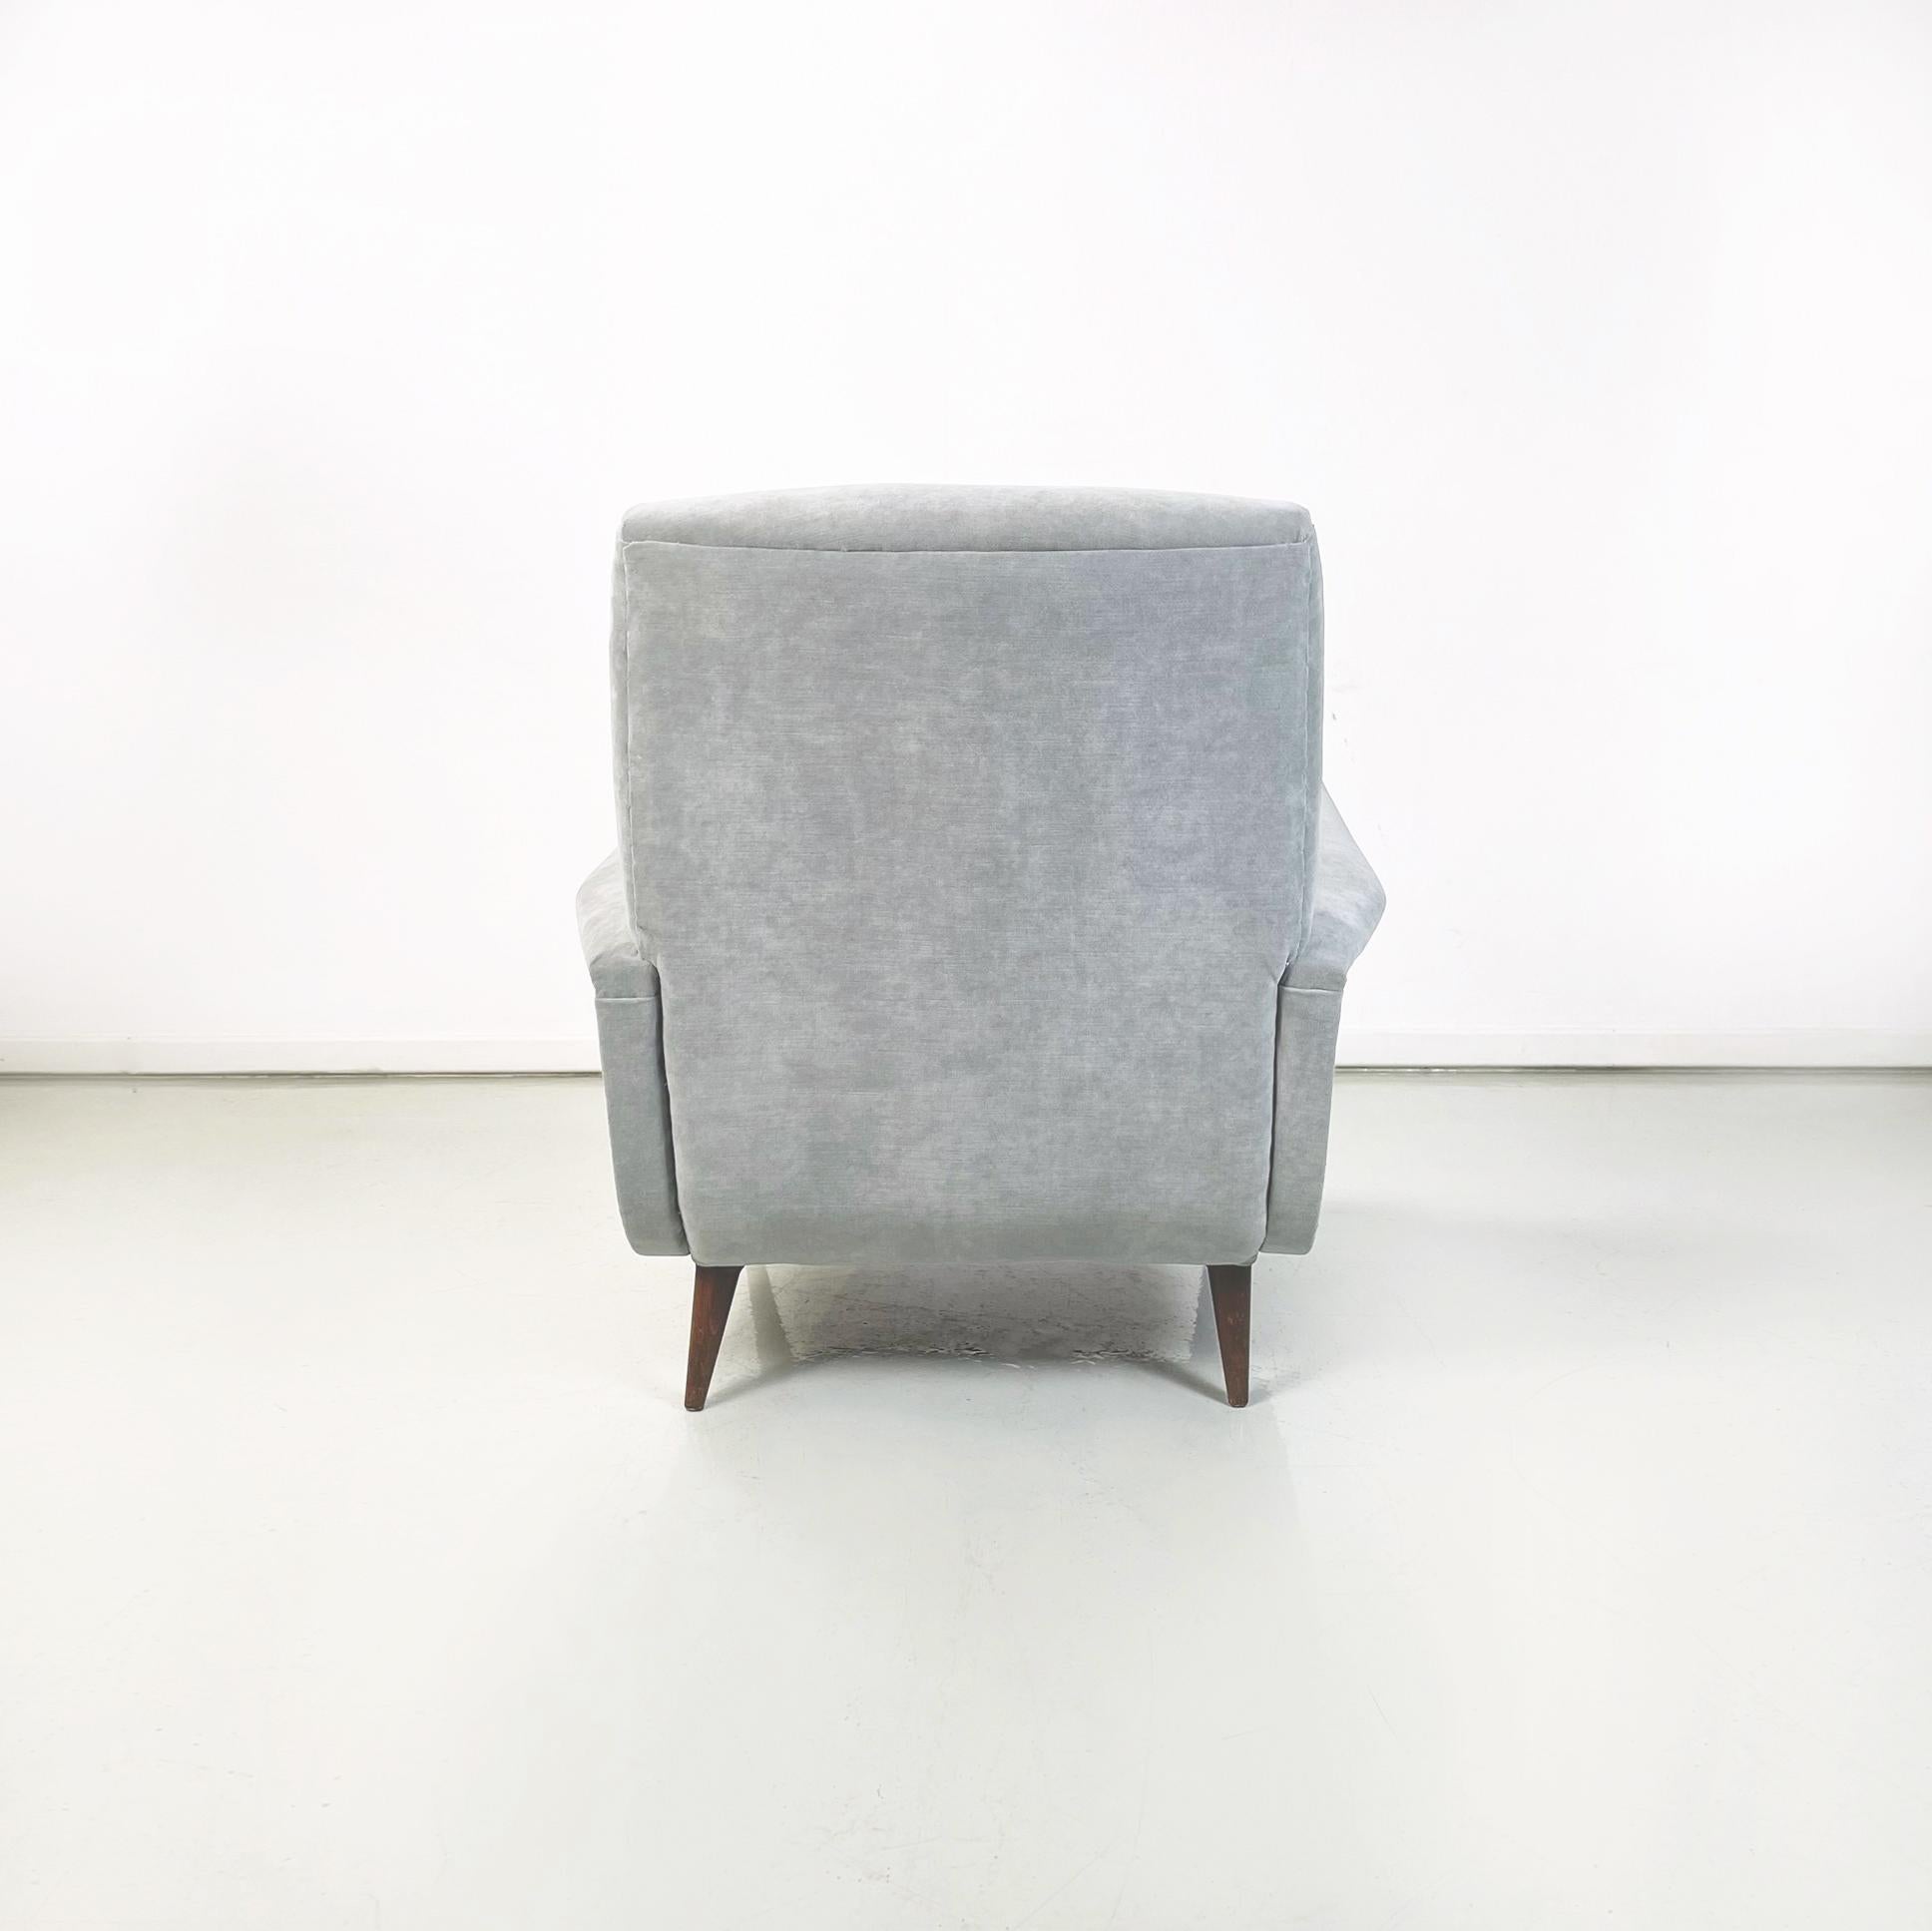 Italian Mid-Century Modern Armchairs in Light Gray Velvet and Wood, 1960s For Sale 2